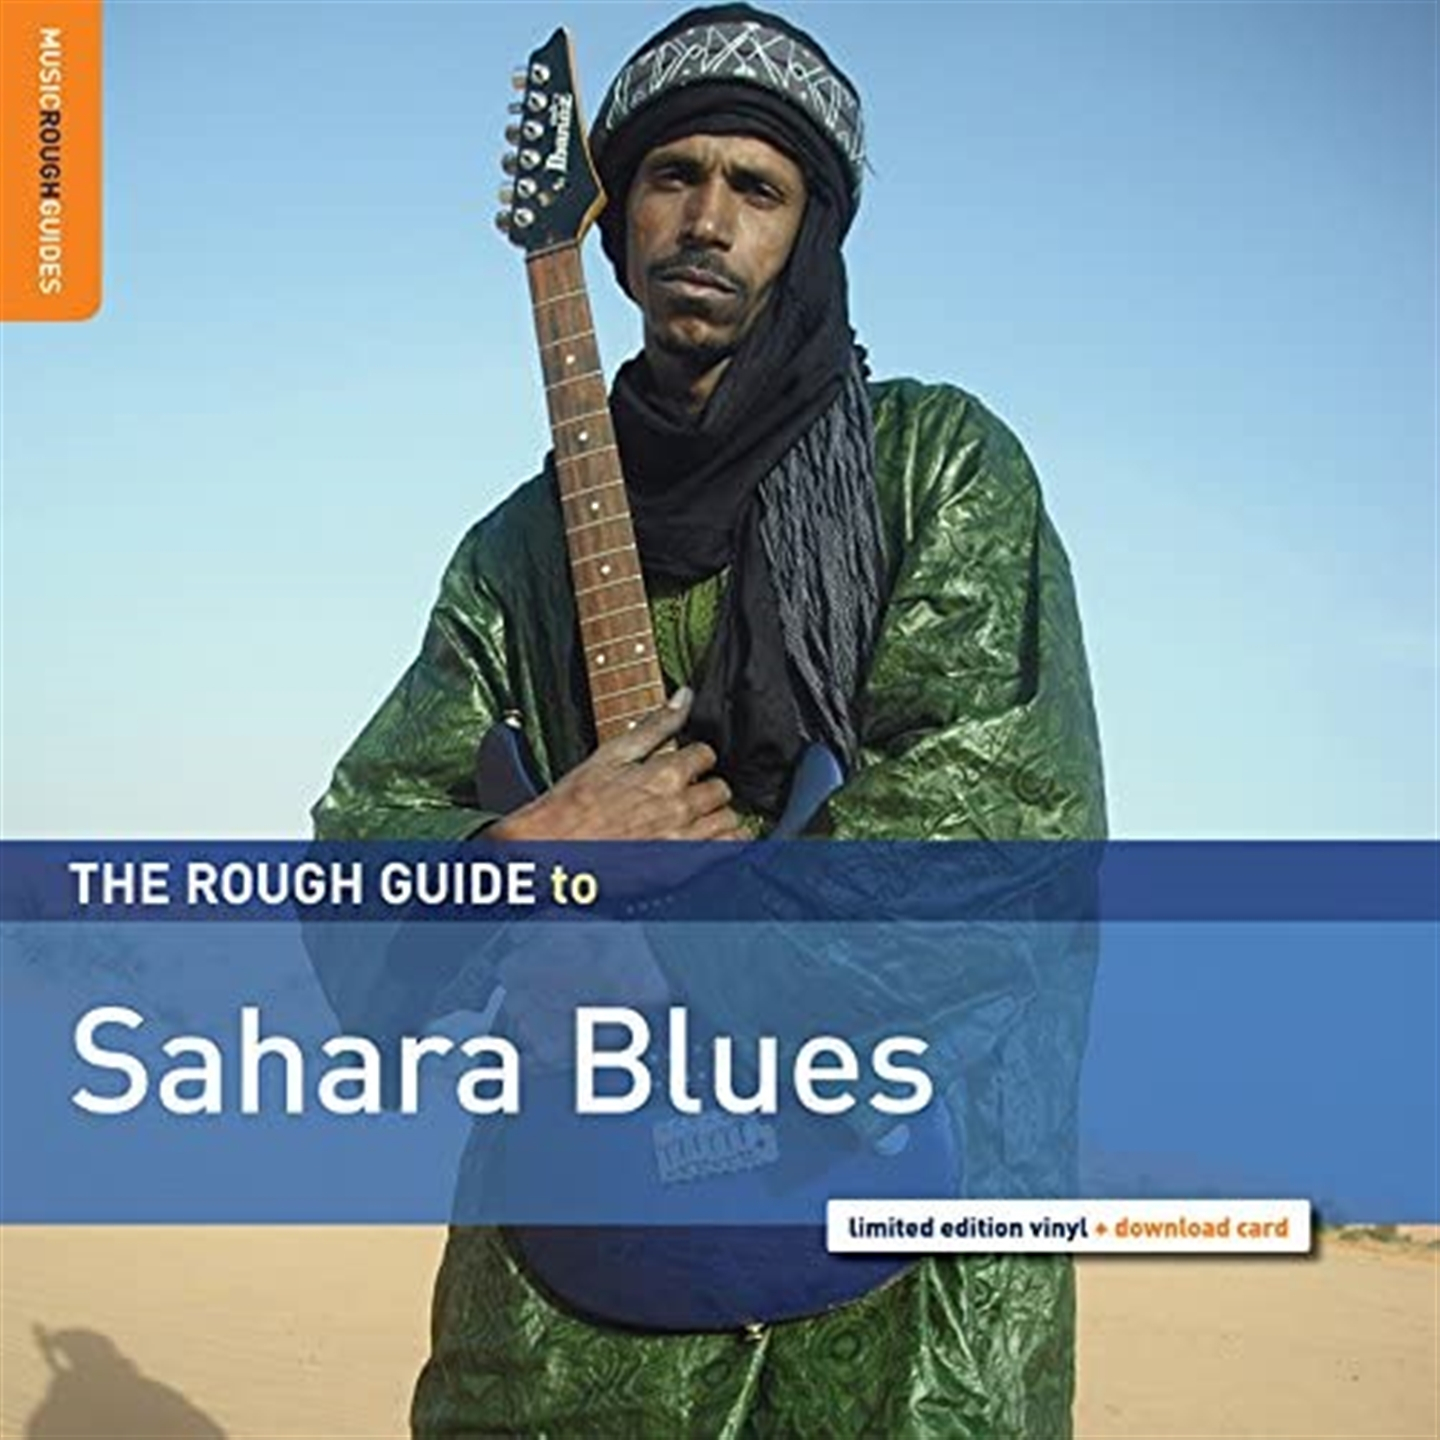 THE ROUGH GUIDE TO SAHARA BLUES [LP]